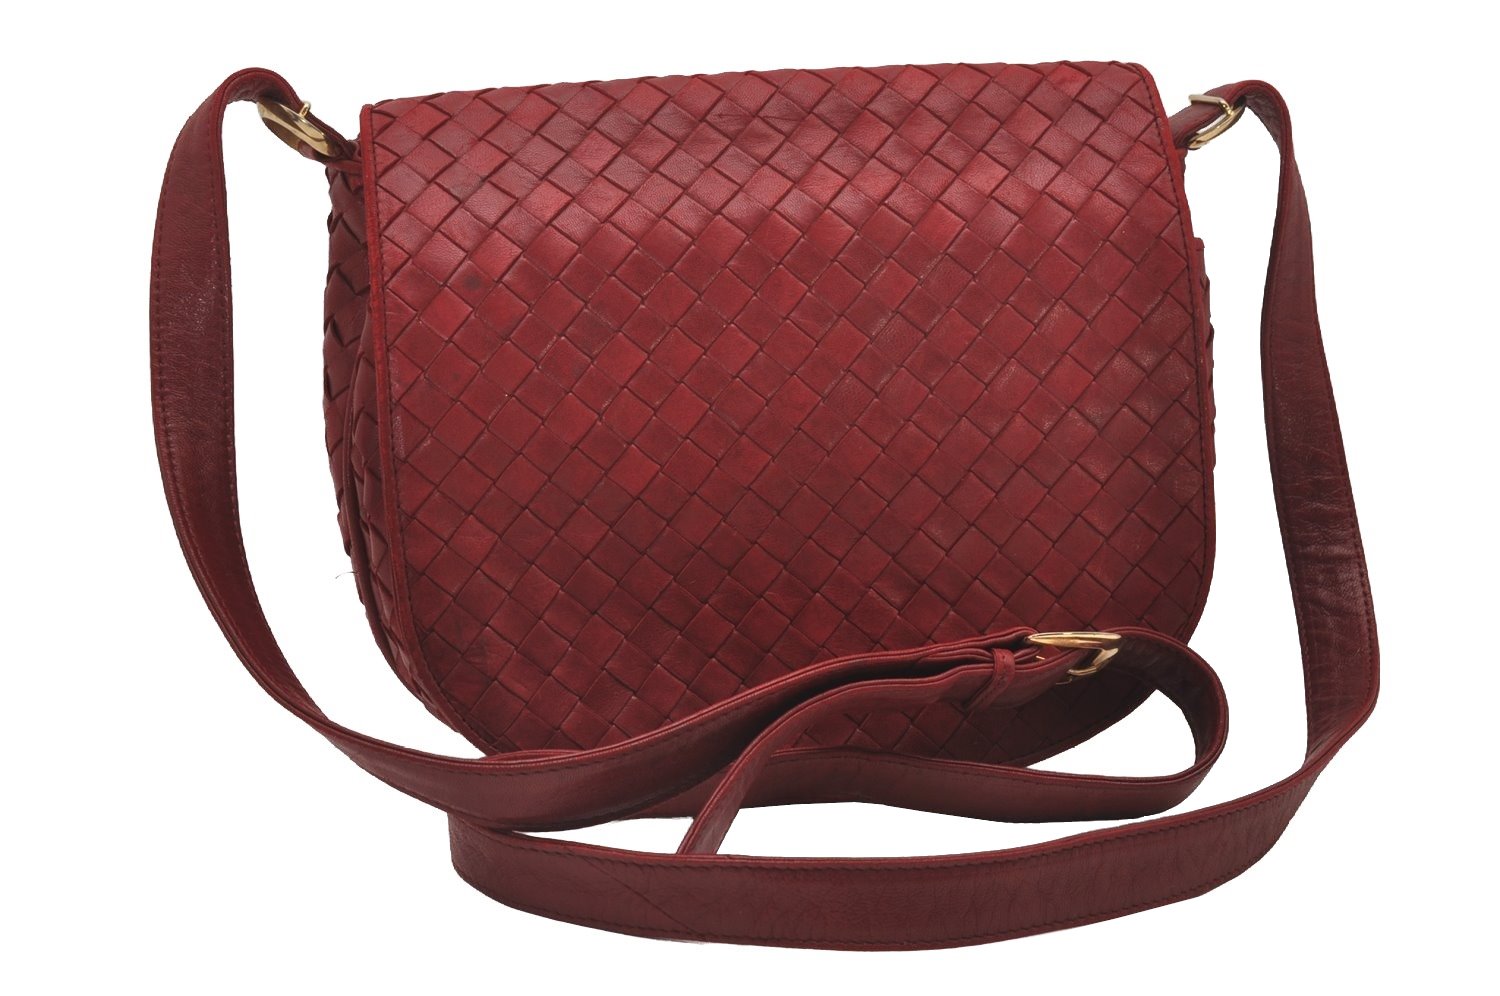 Authentic BOTTEGA VENETA Intrecciato Leather Shoulder Cross Body Bag Red 3886I